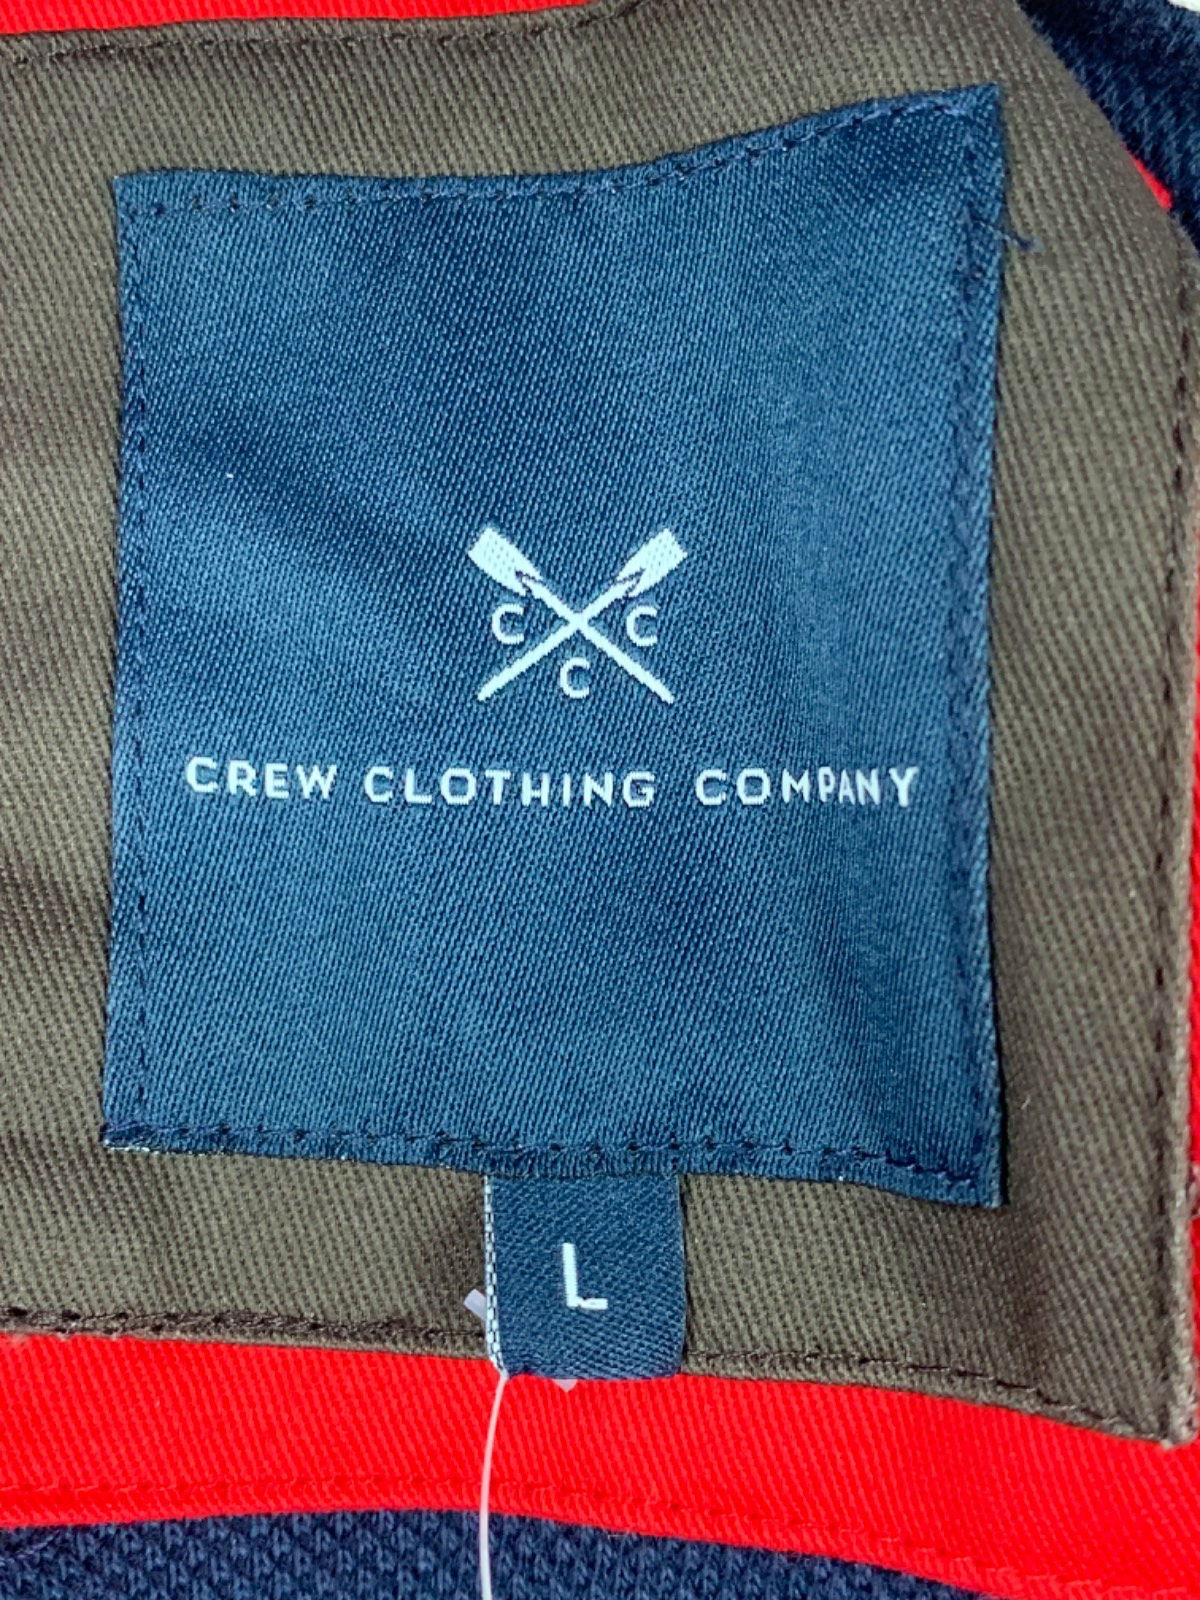 Crew Clothing Company Navy Half-Zip Sweatshirt Large